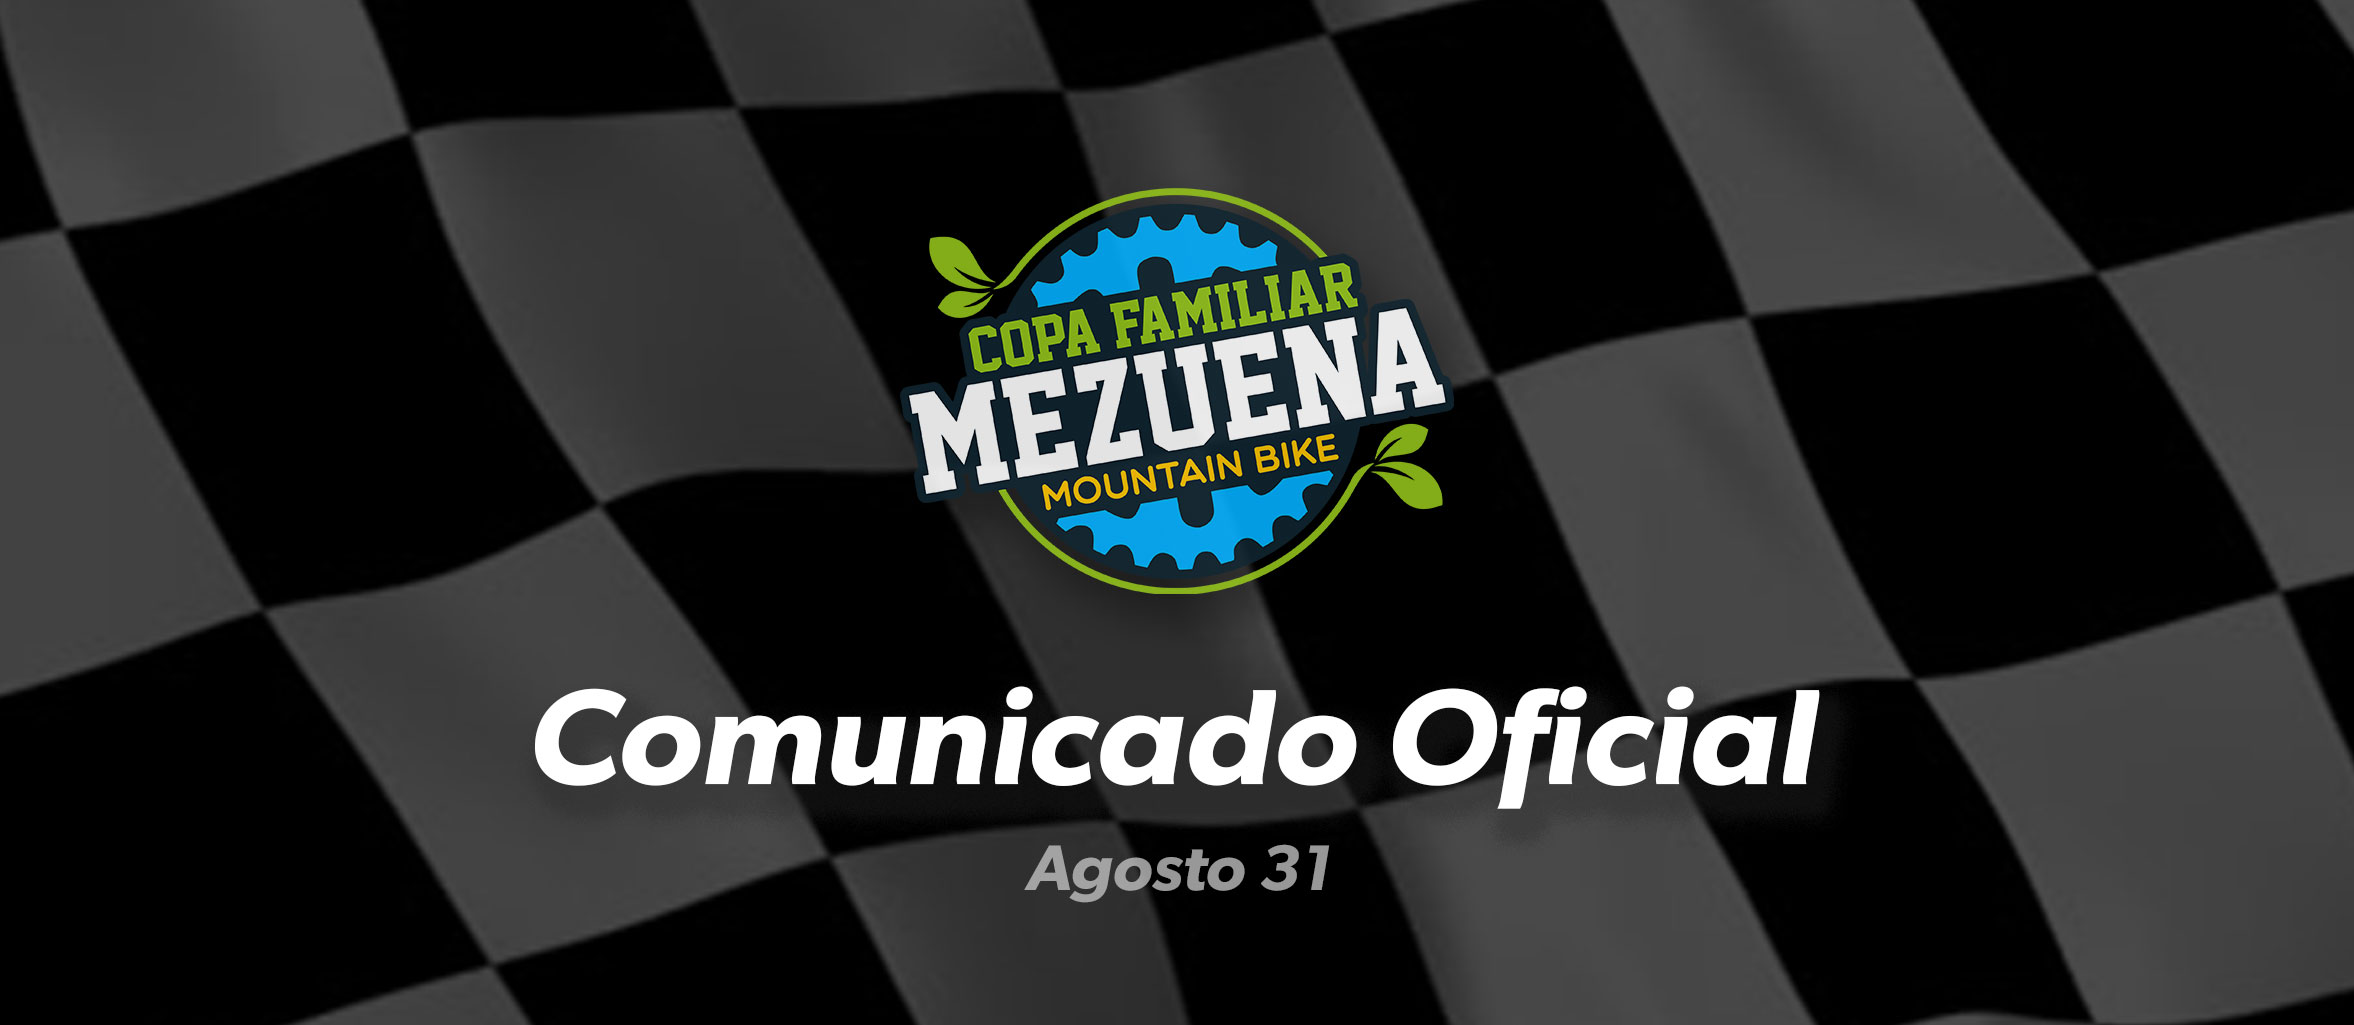 Comunicado oficial Copa Mezuena - Agosto 31